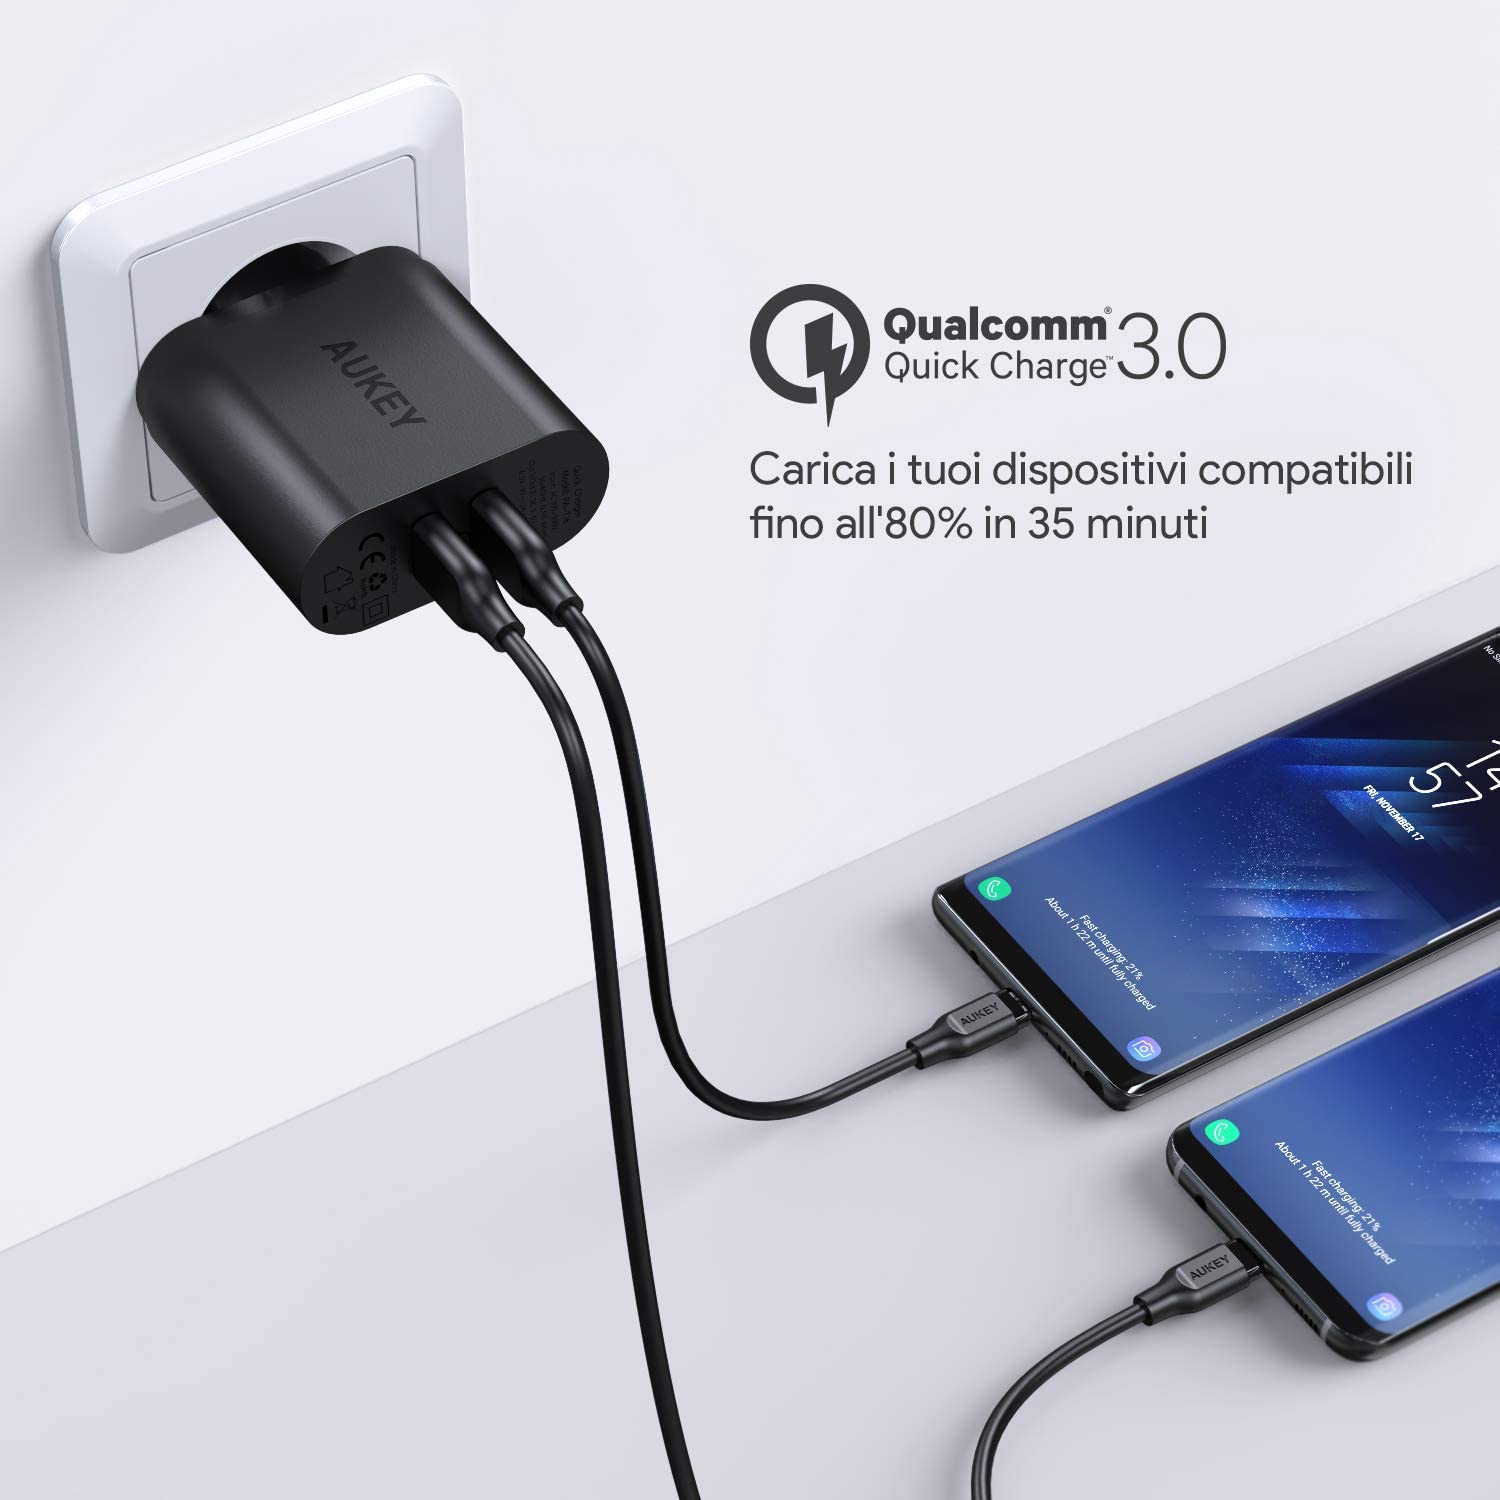 AUKEY Quick Charge 3.0 Caricabatterie USB da Muro